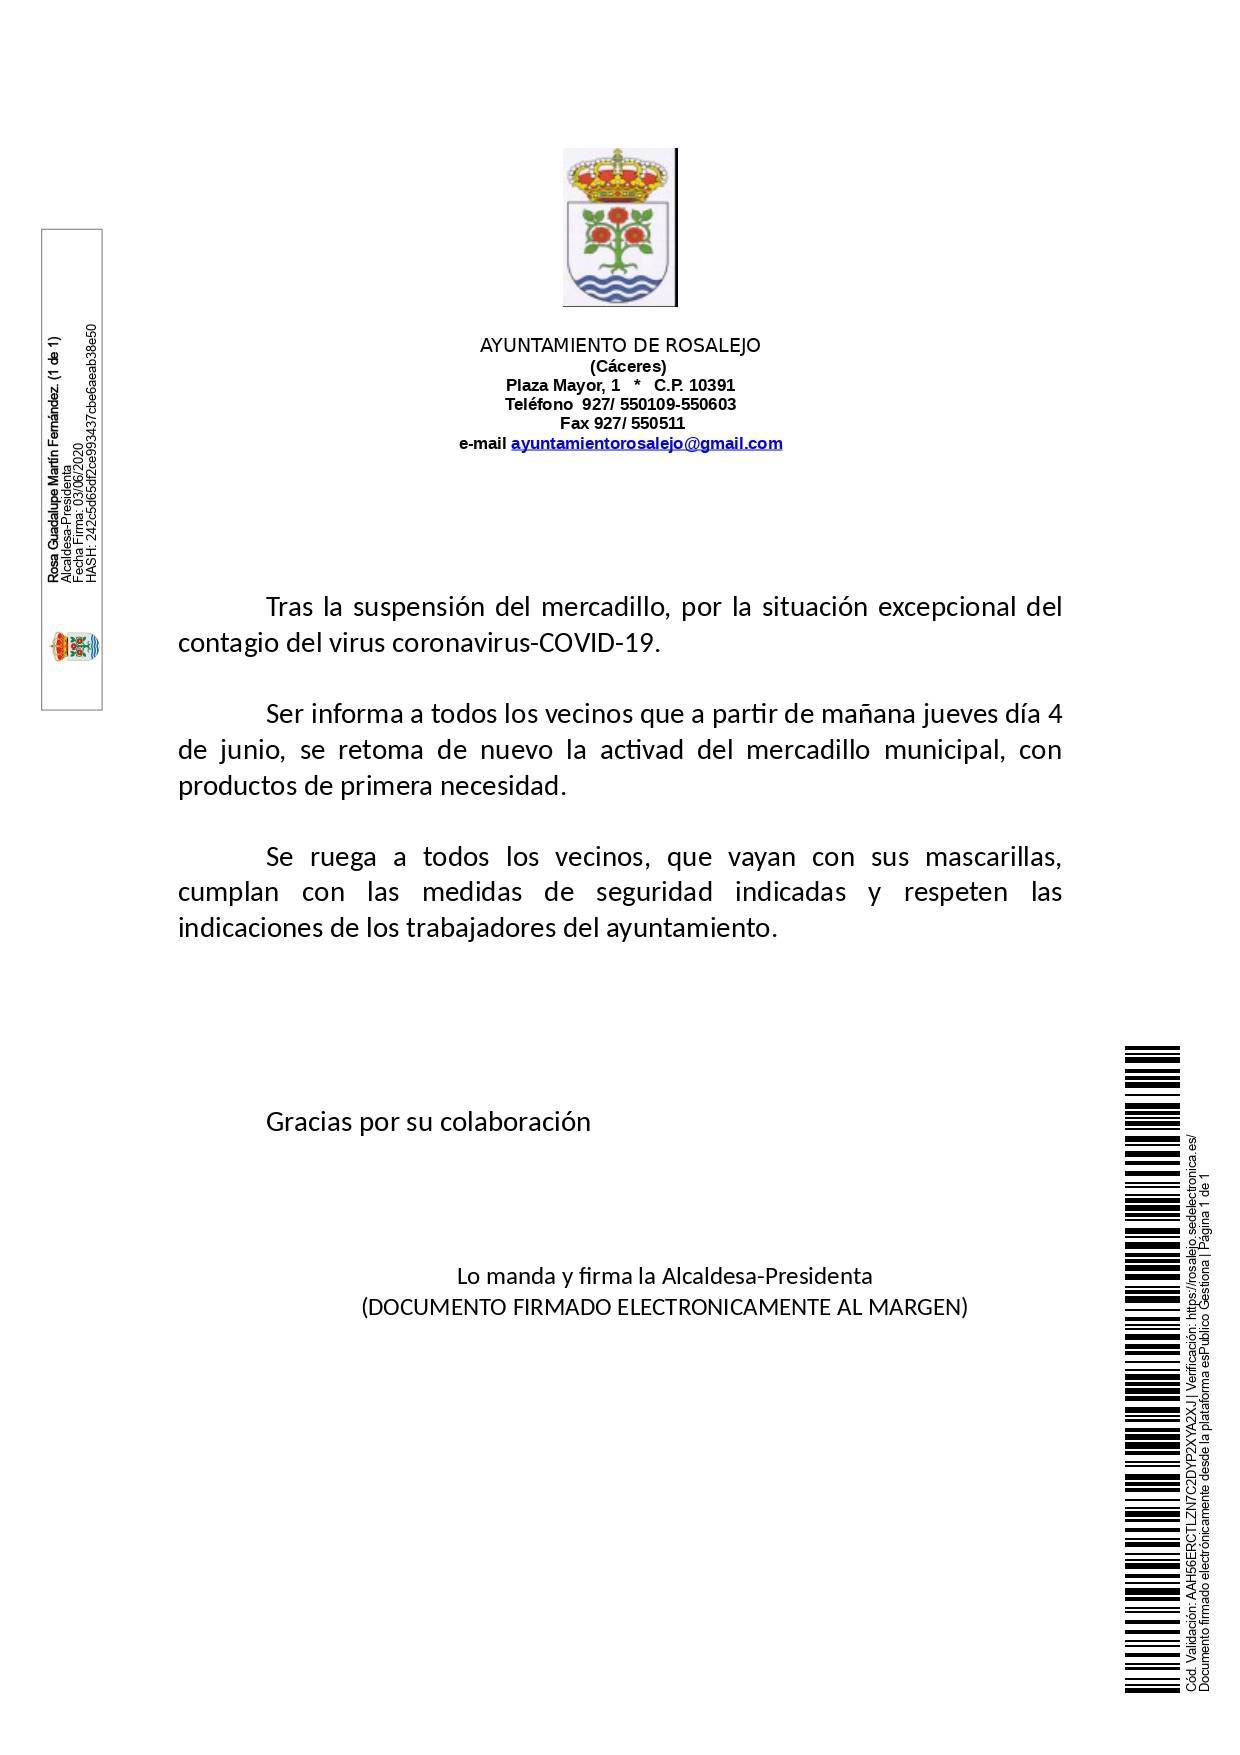 Apertura del mercadillo municipal junio 2020 - Rosalejo (Cáceres)